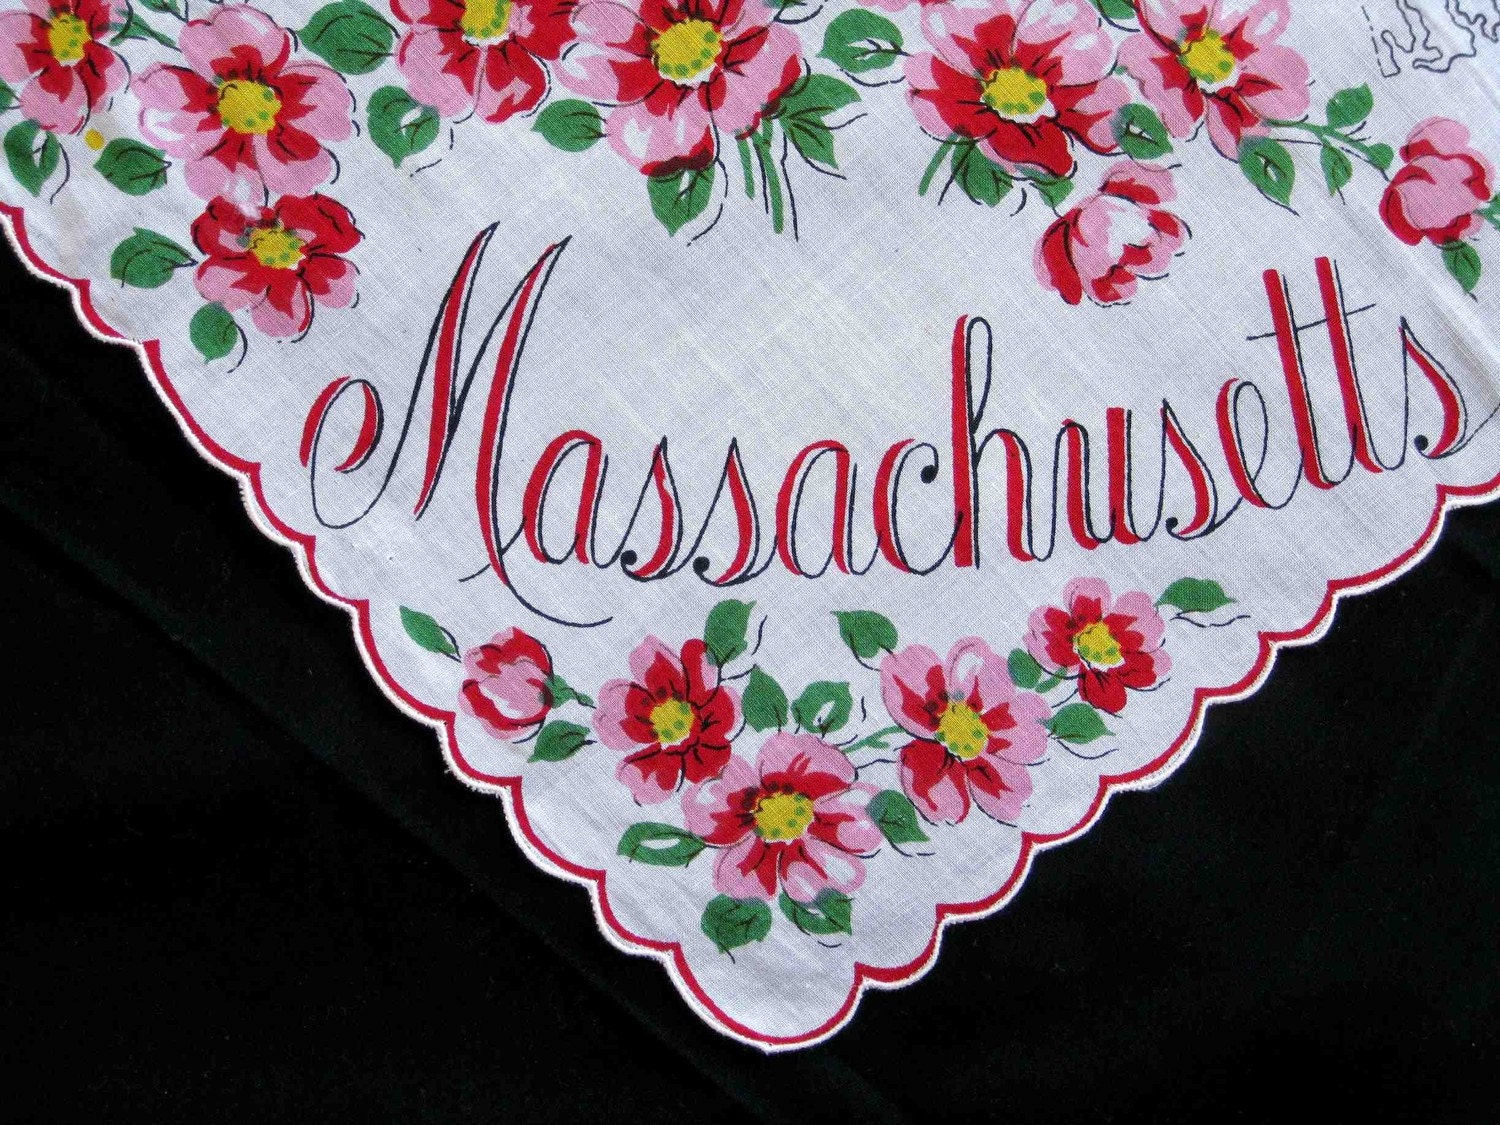 Massachusetts State Flower Mayflower. Massachusetts Mayflower State Souvenir Franshaw Handkerchief. From mothersstuff